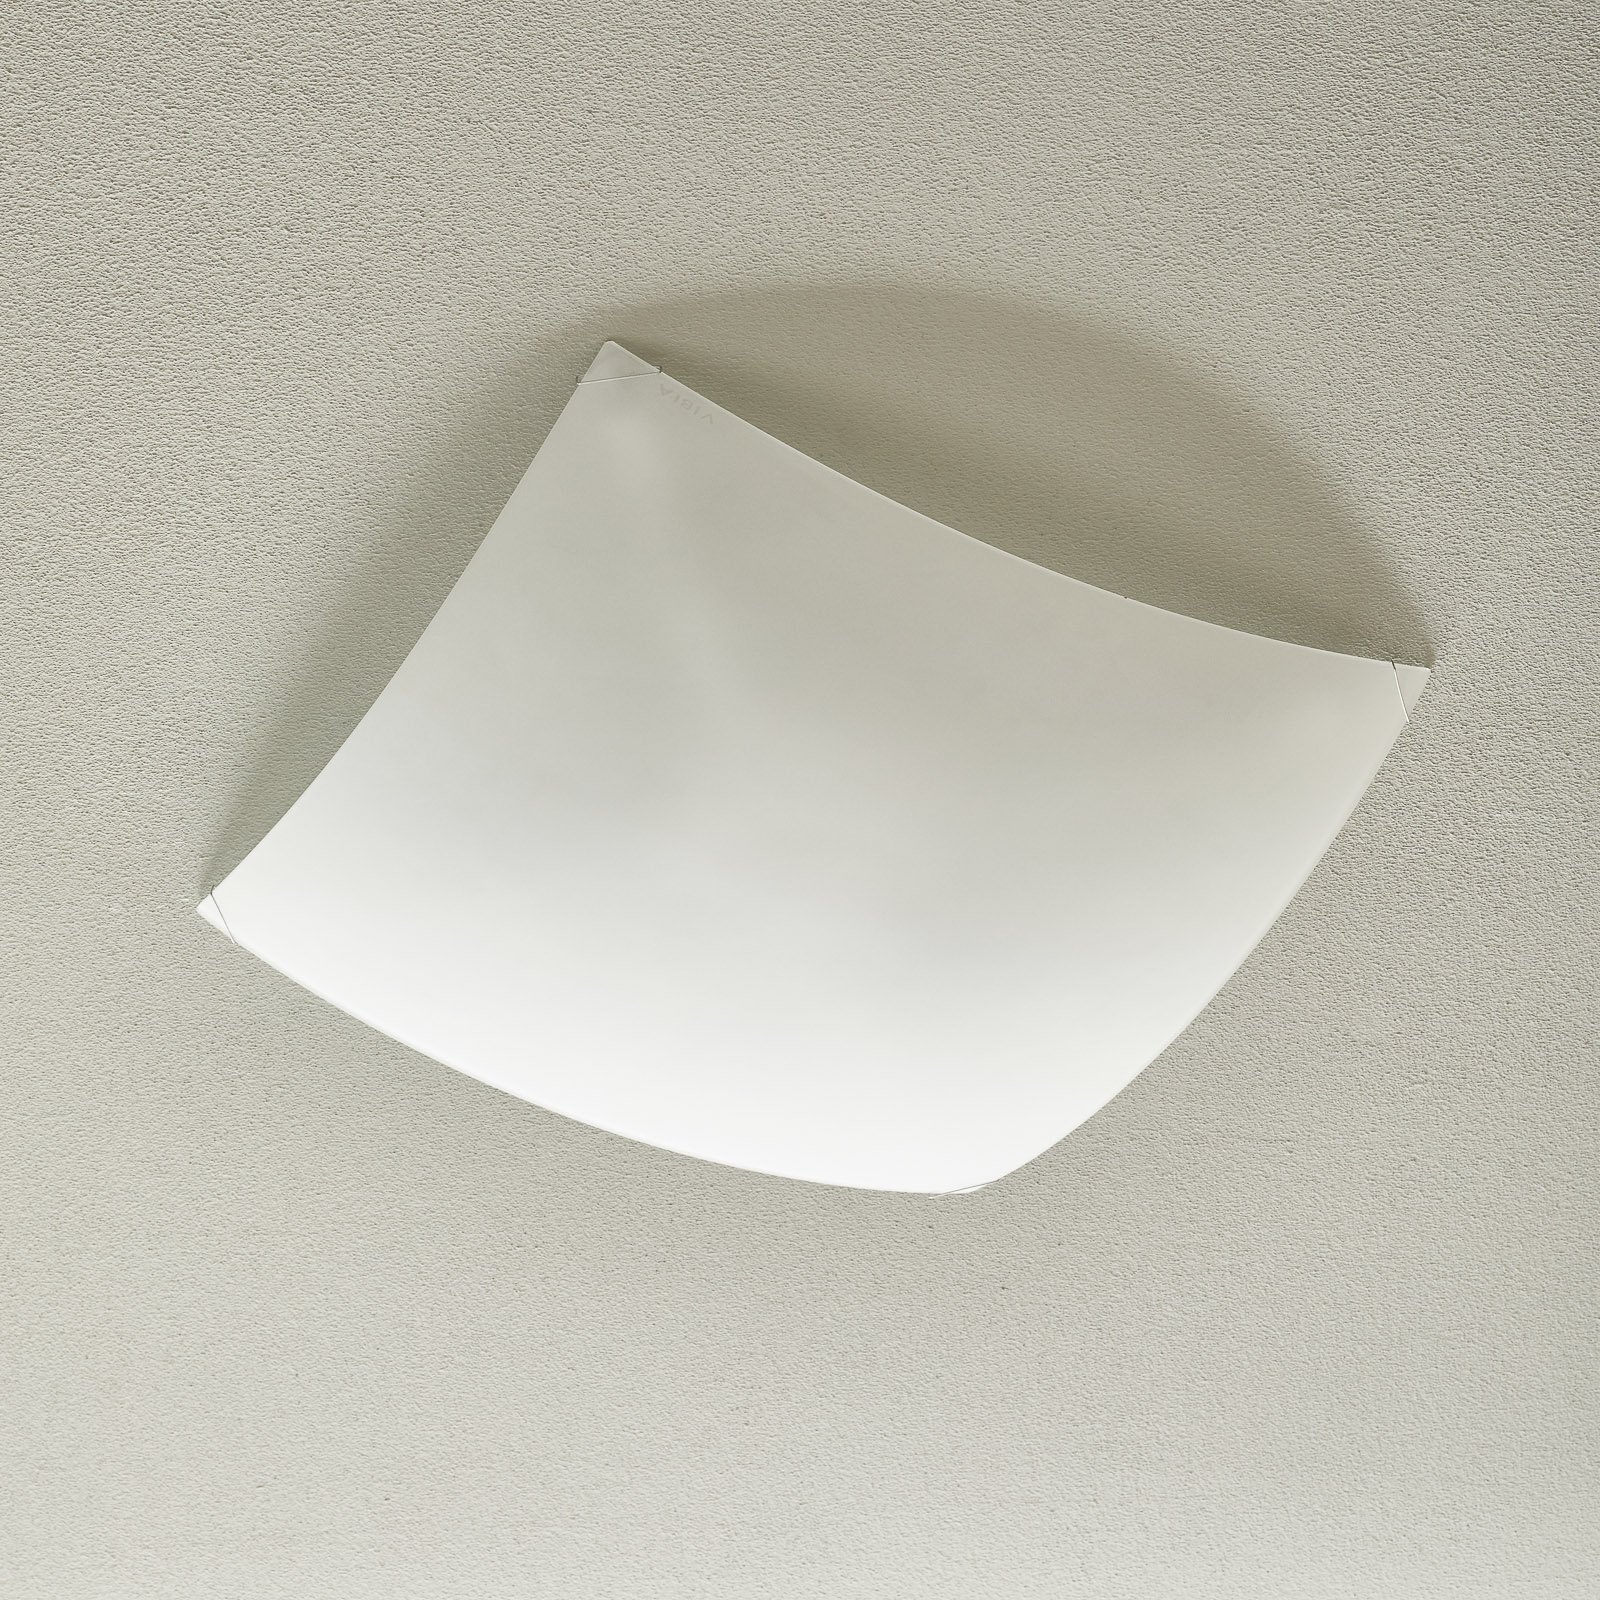 Vibia Quadra Ice - ceiling light 66 cm